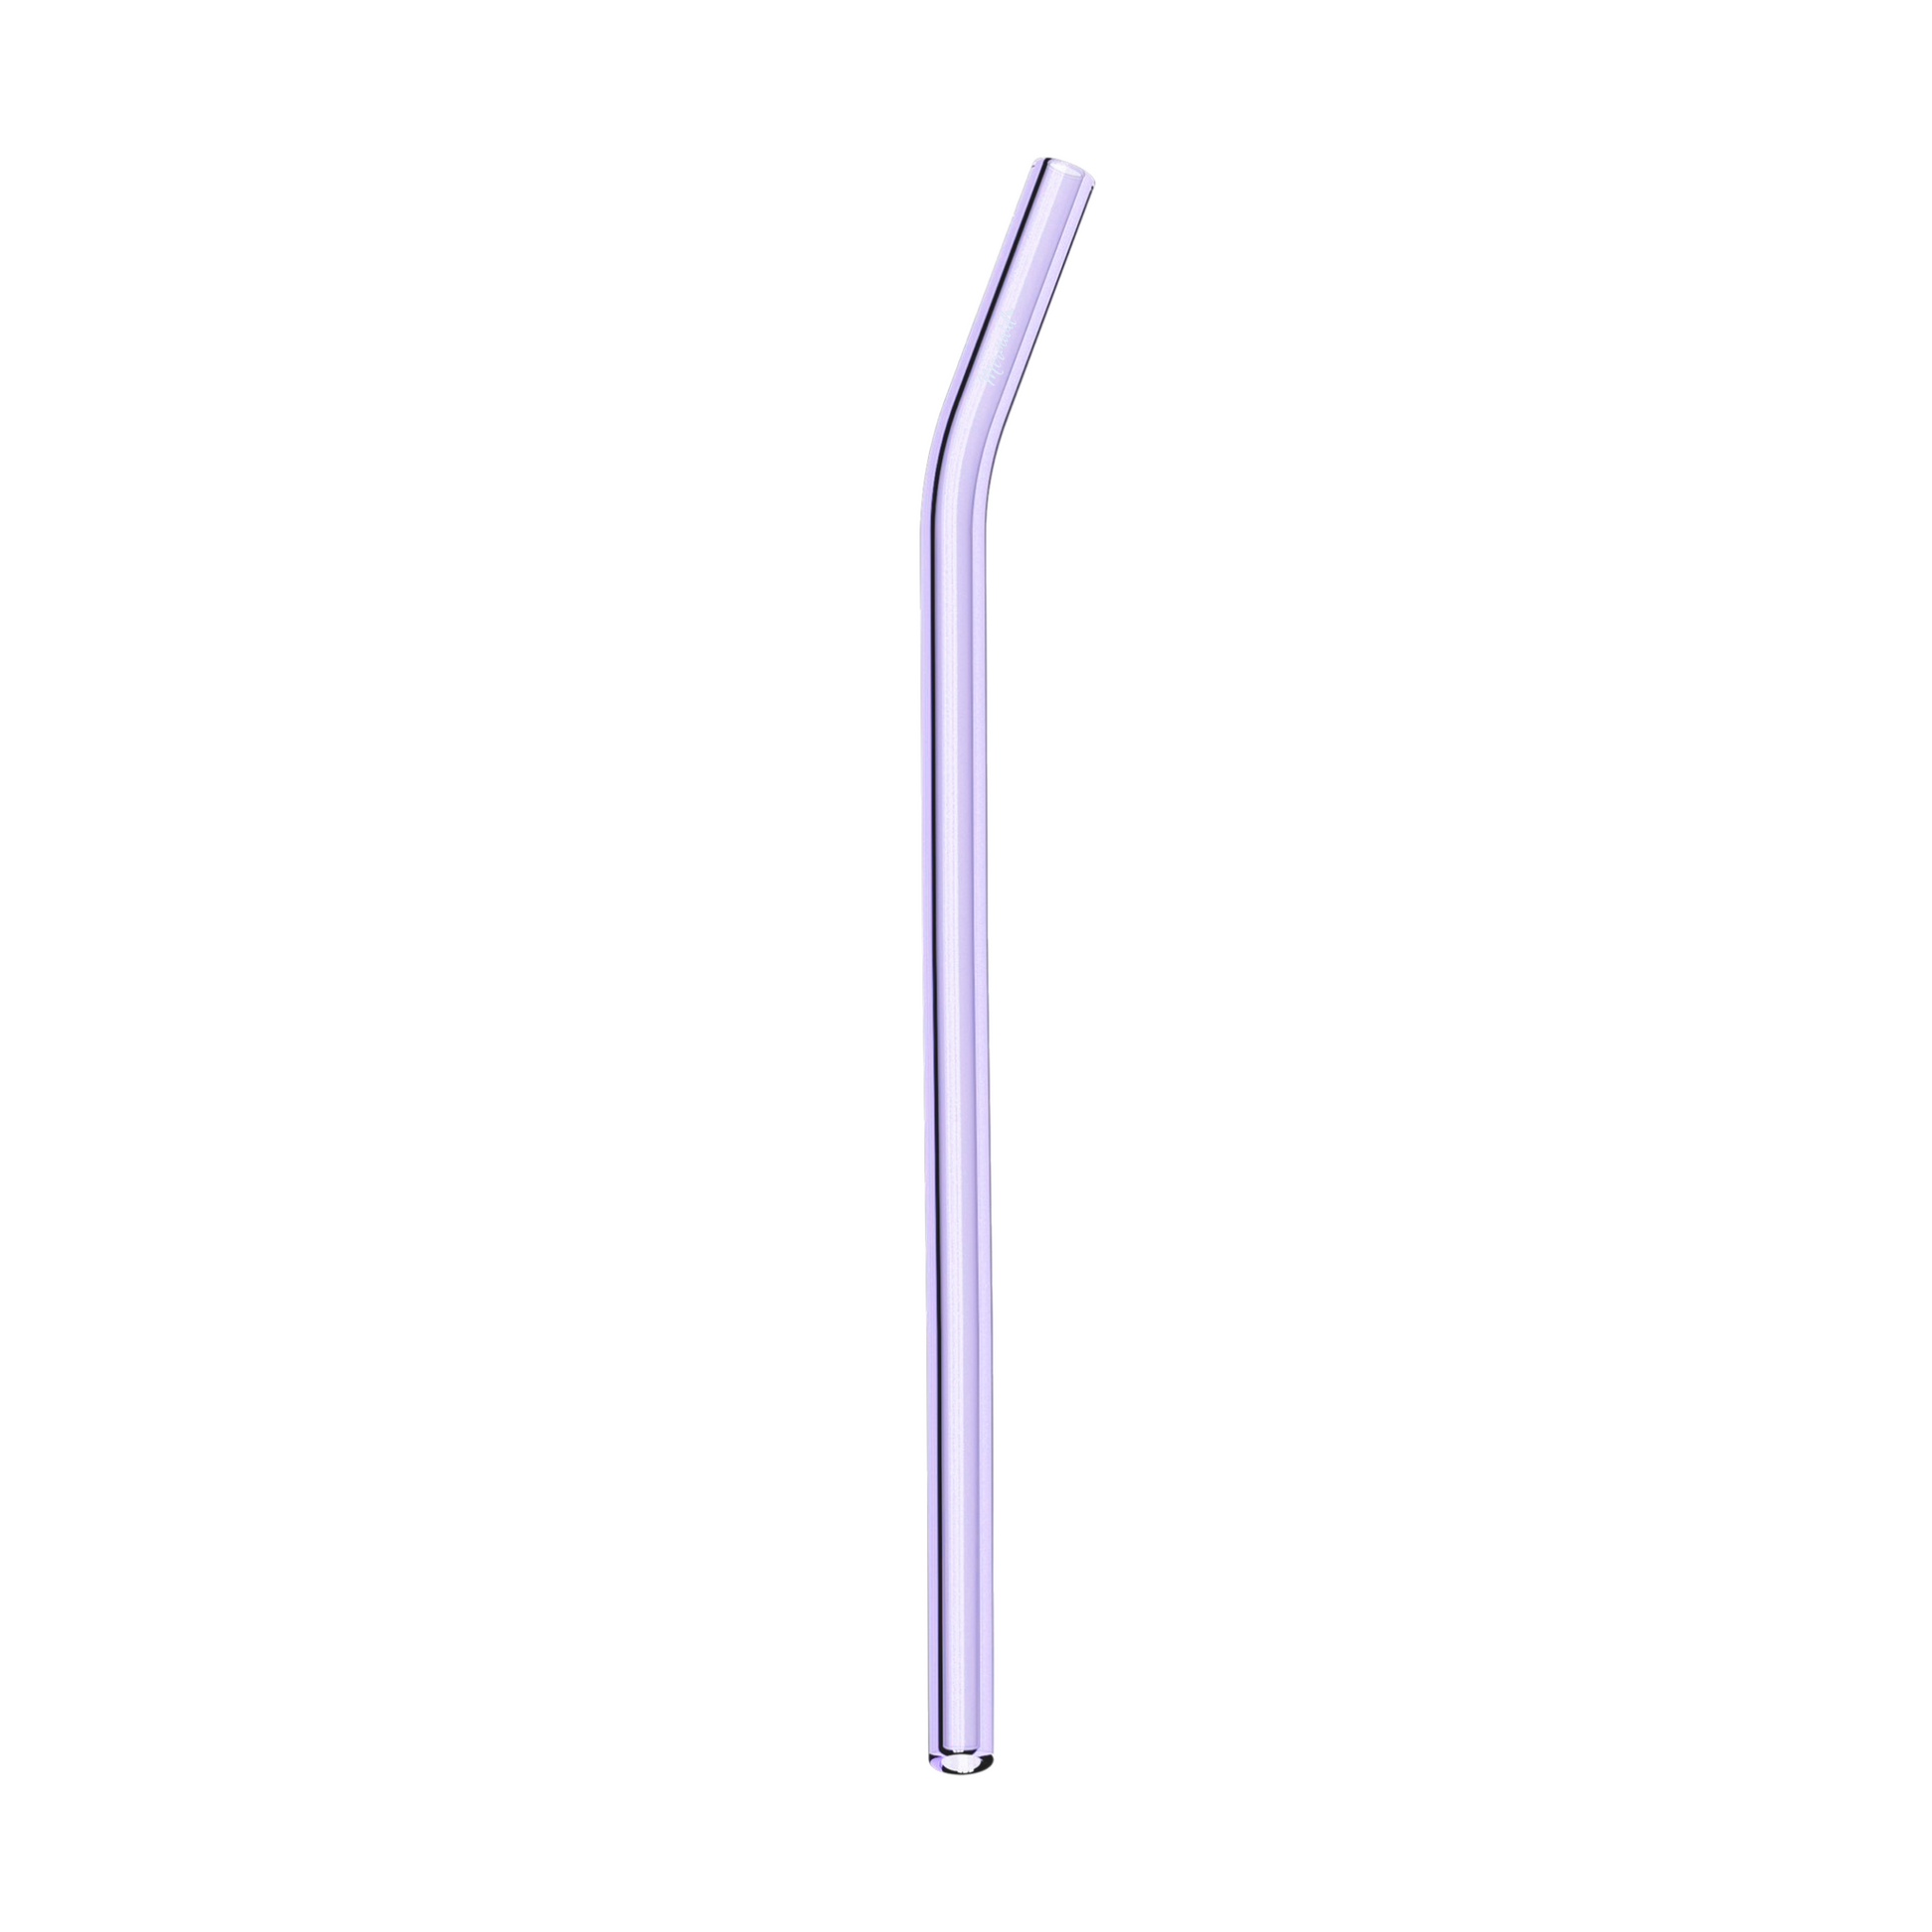 Glass Straws, Mermaid Straw, Reusable Straw, glass purple curved single